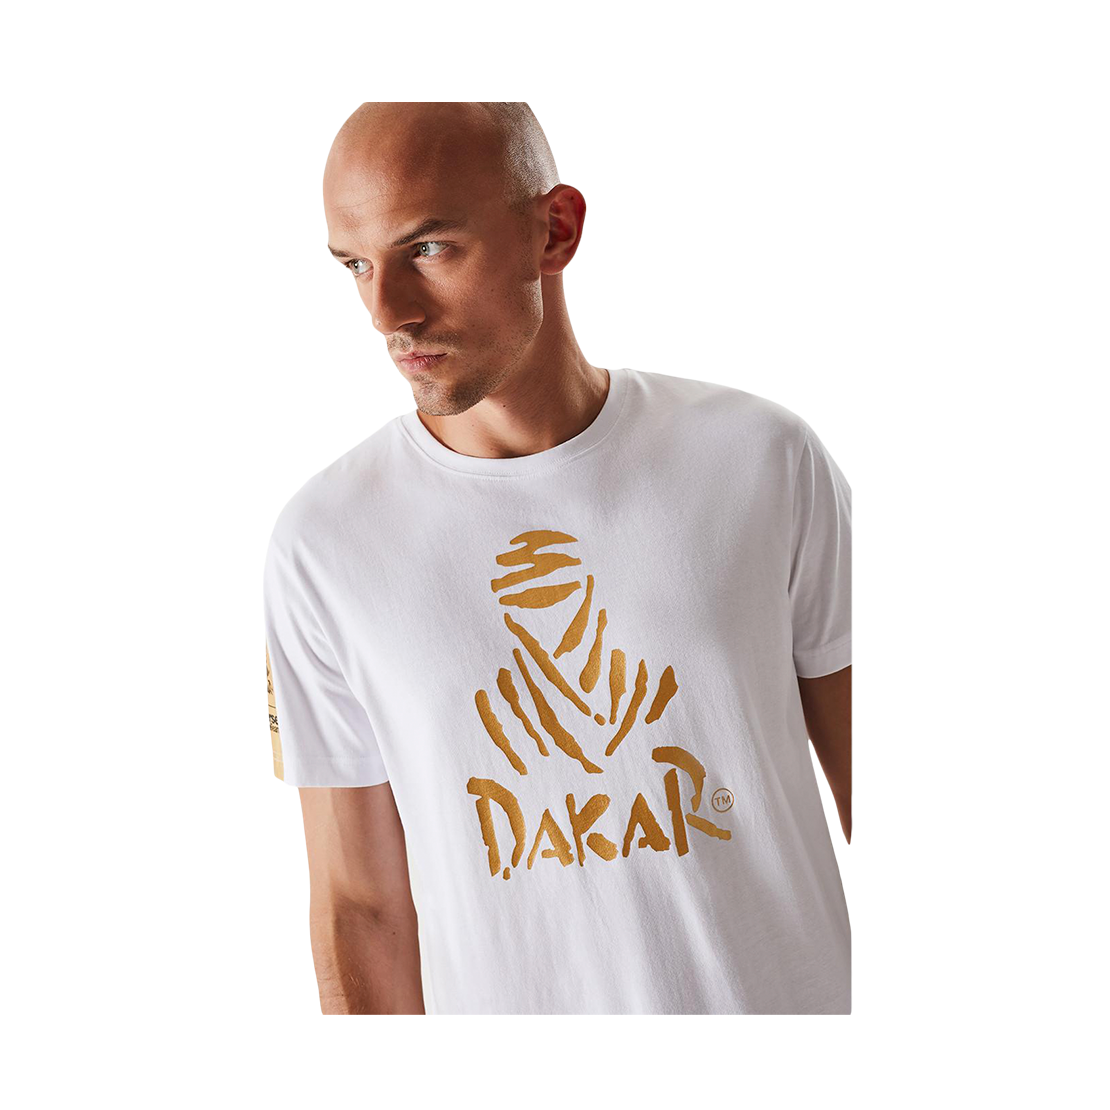 T-Shirt Dakar Vip 0422 BR - 38539-100-90